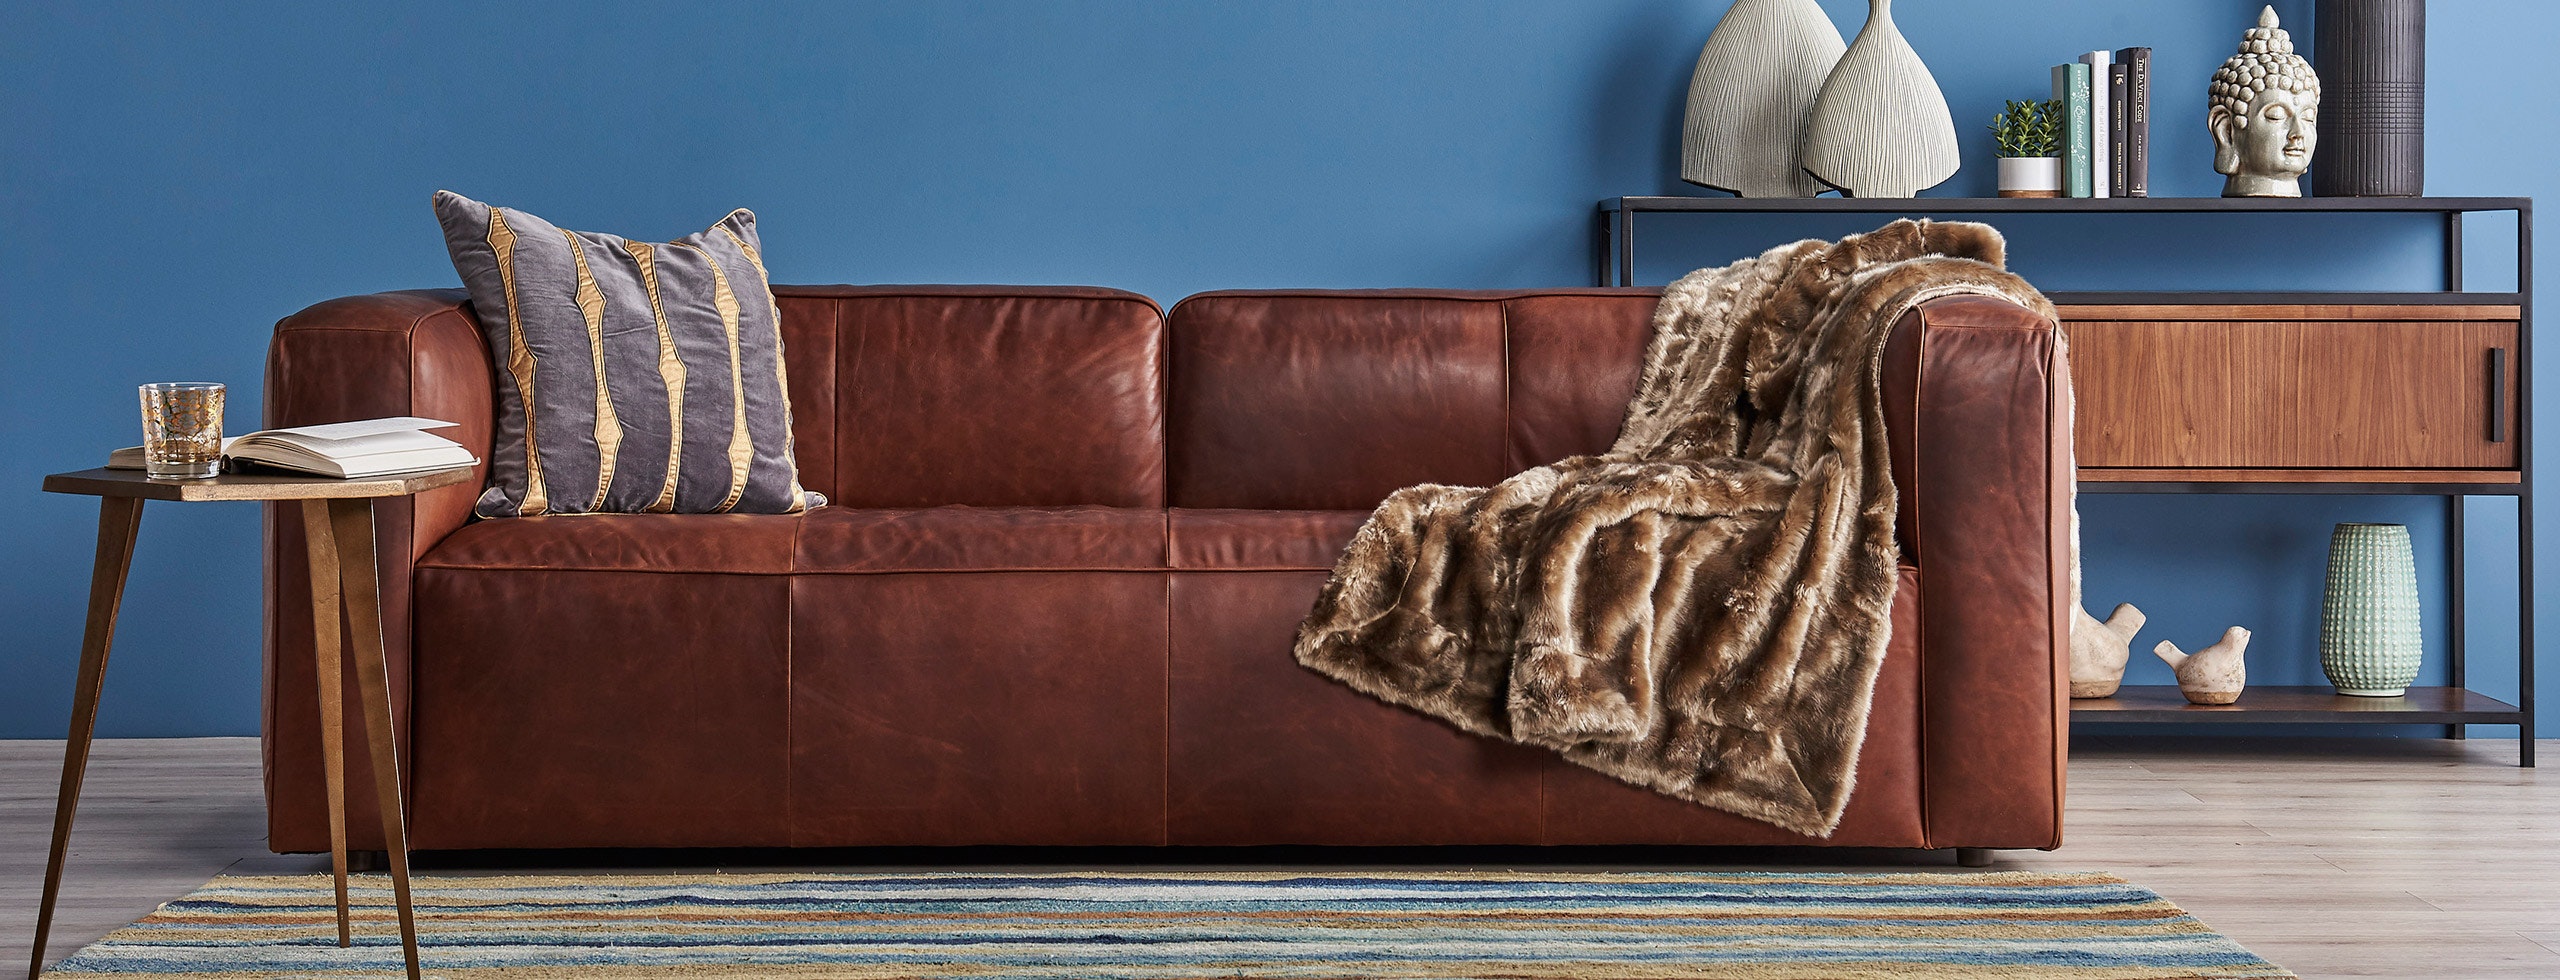 new logan leather sofa